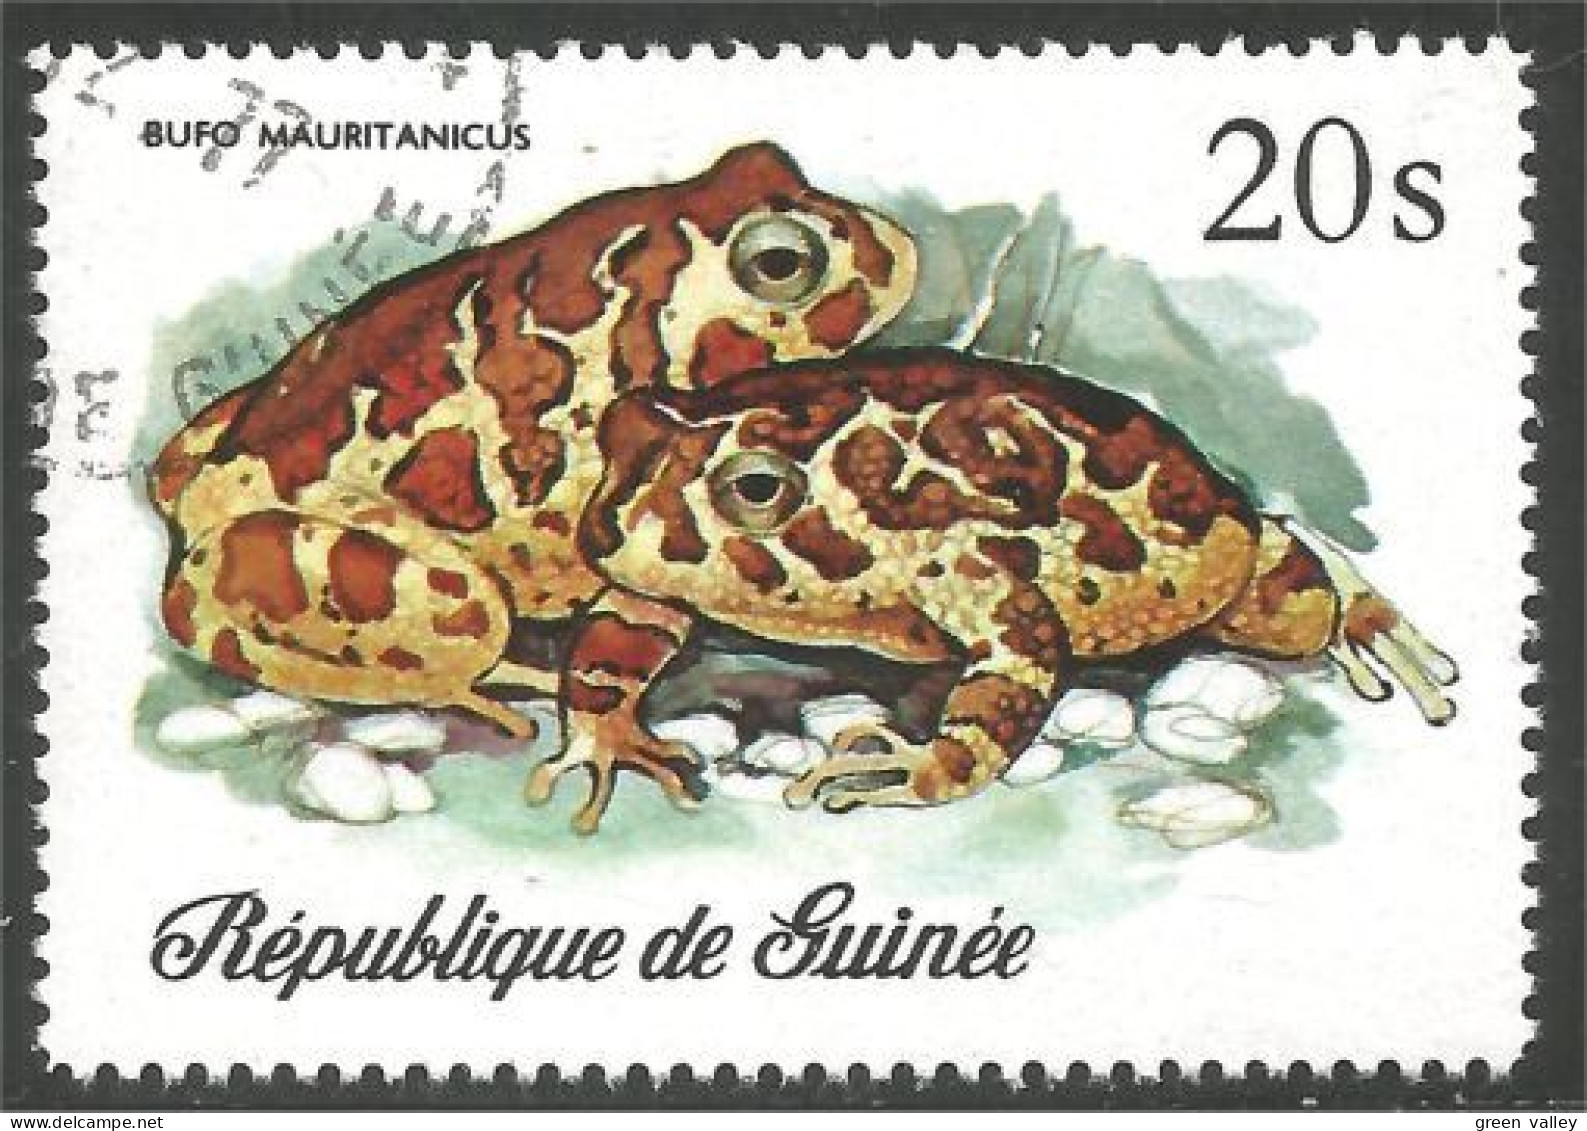 470 Guinee Grenouille Frog Frosch Rana (GUF-113b) - Grenouilles